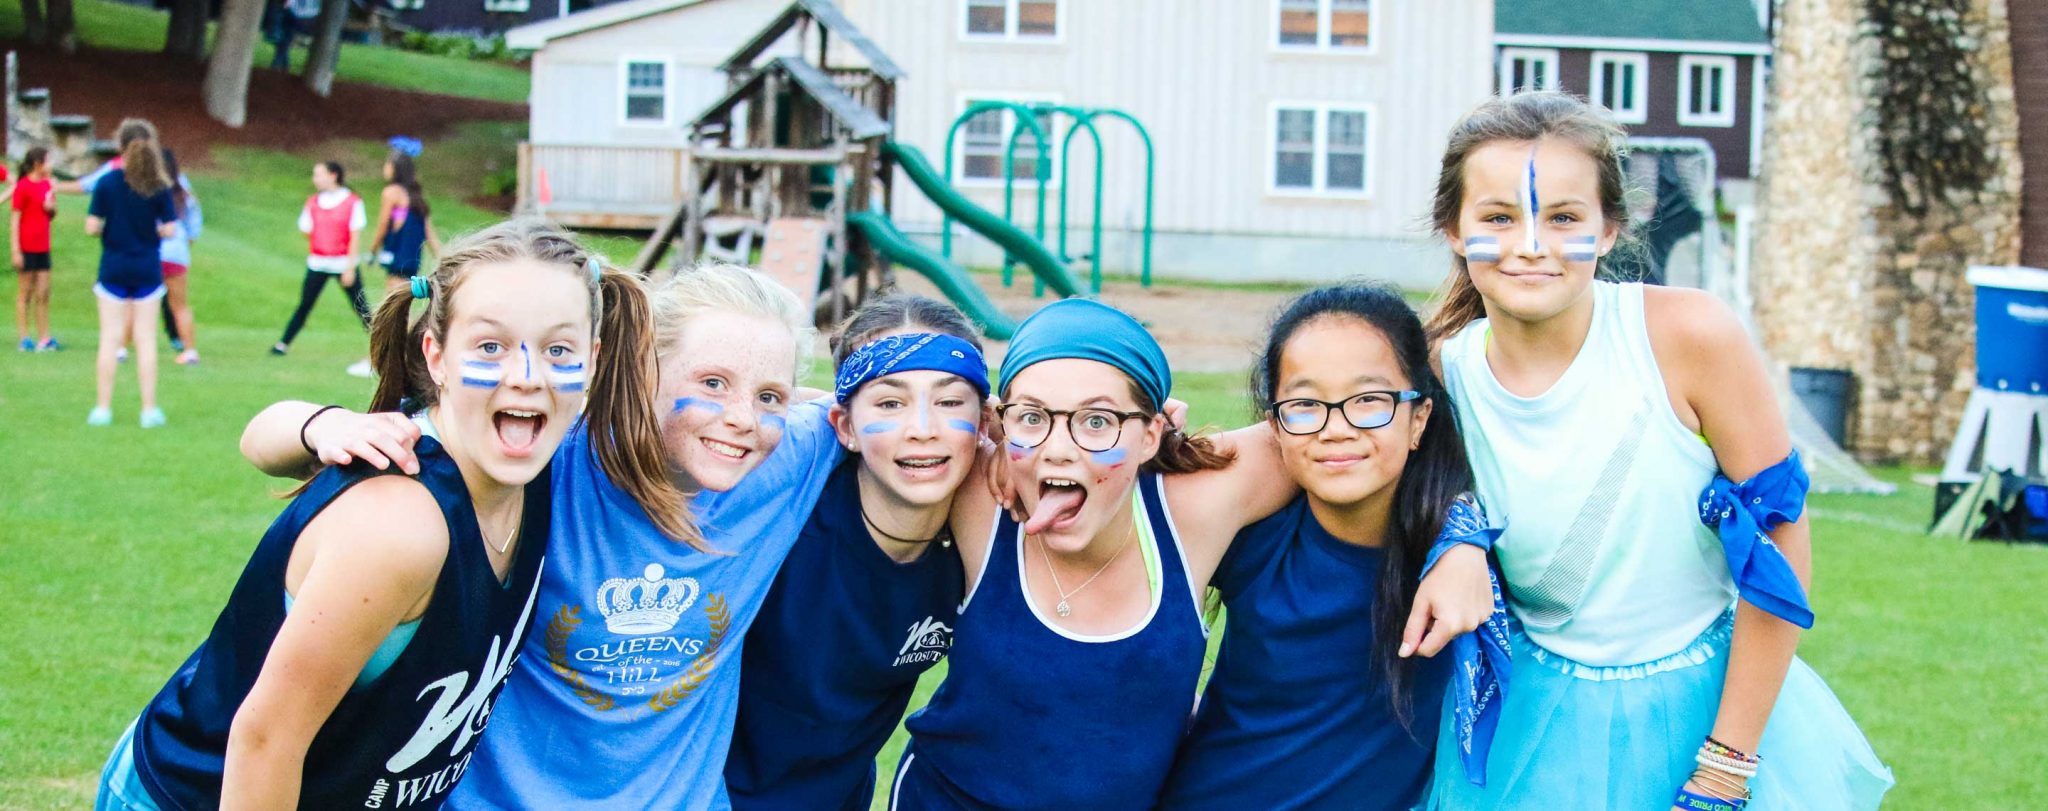 Kineo - 6th Grade Girls Summer Camp Program - Camp Wicosuta